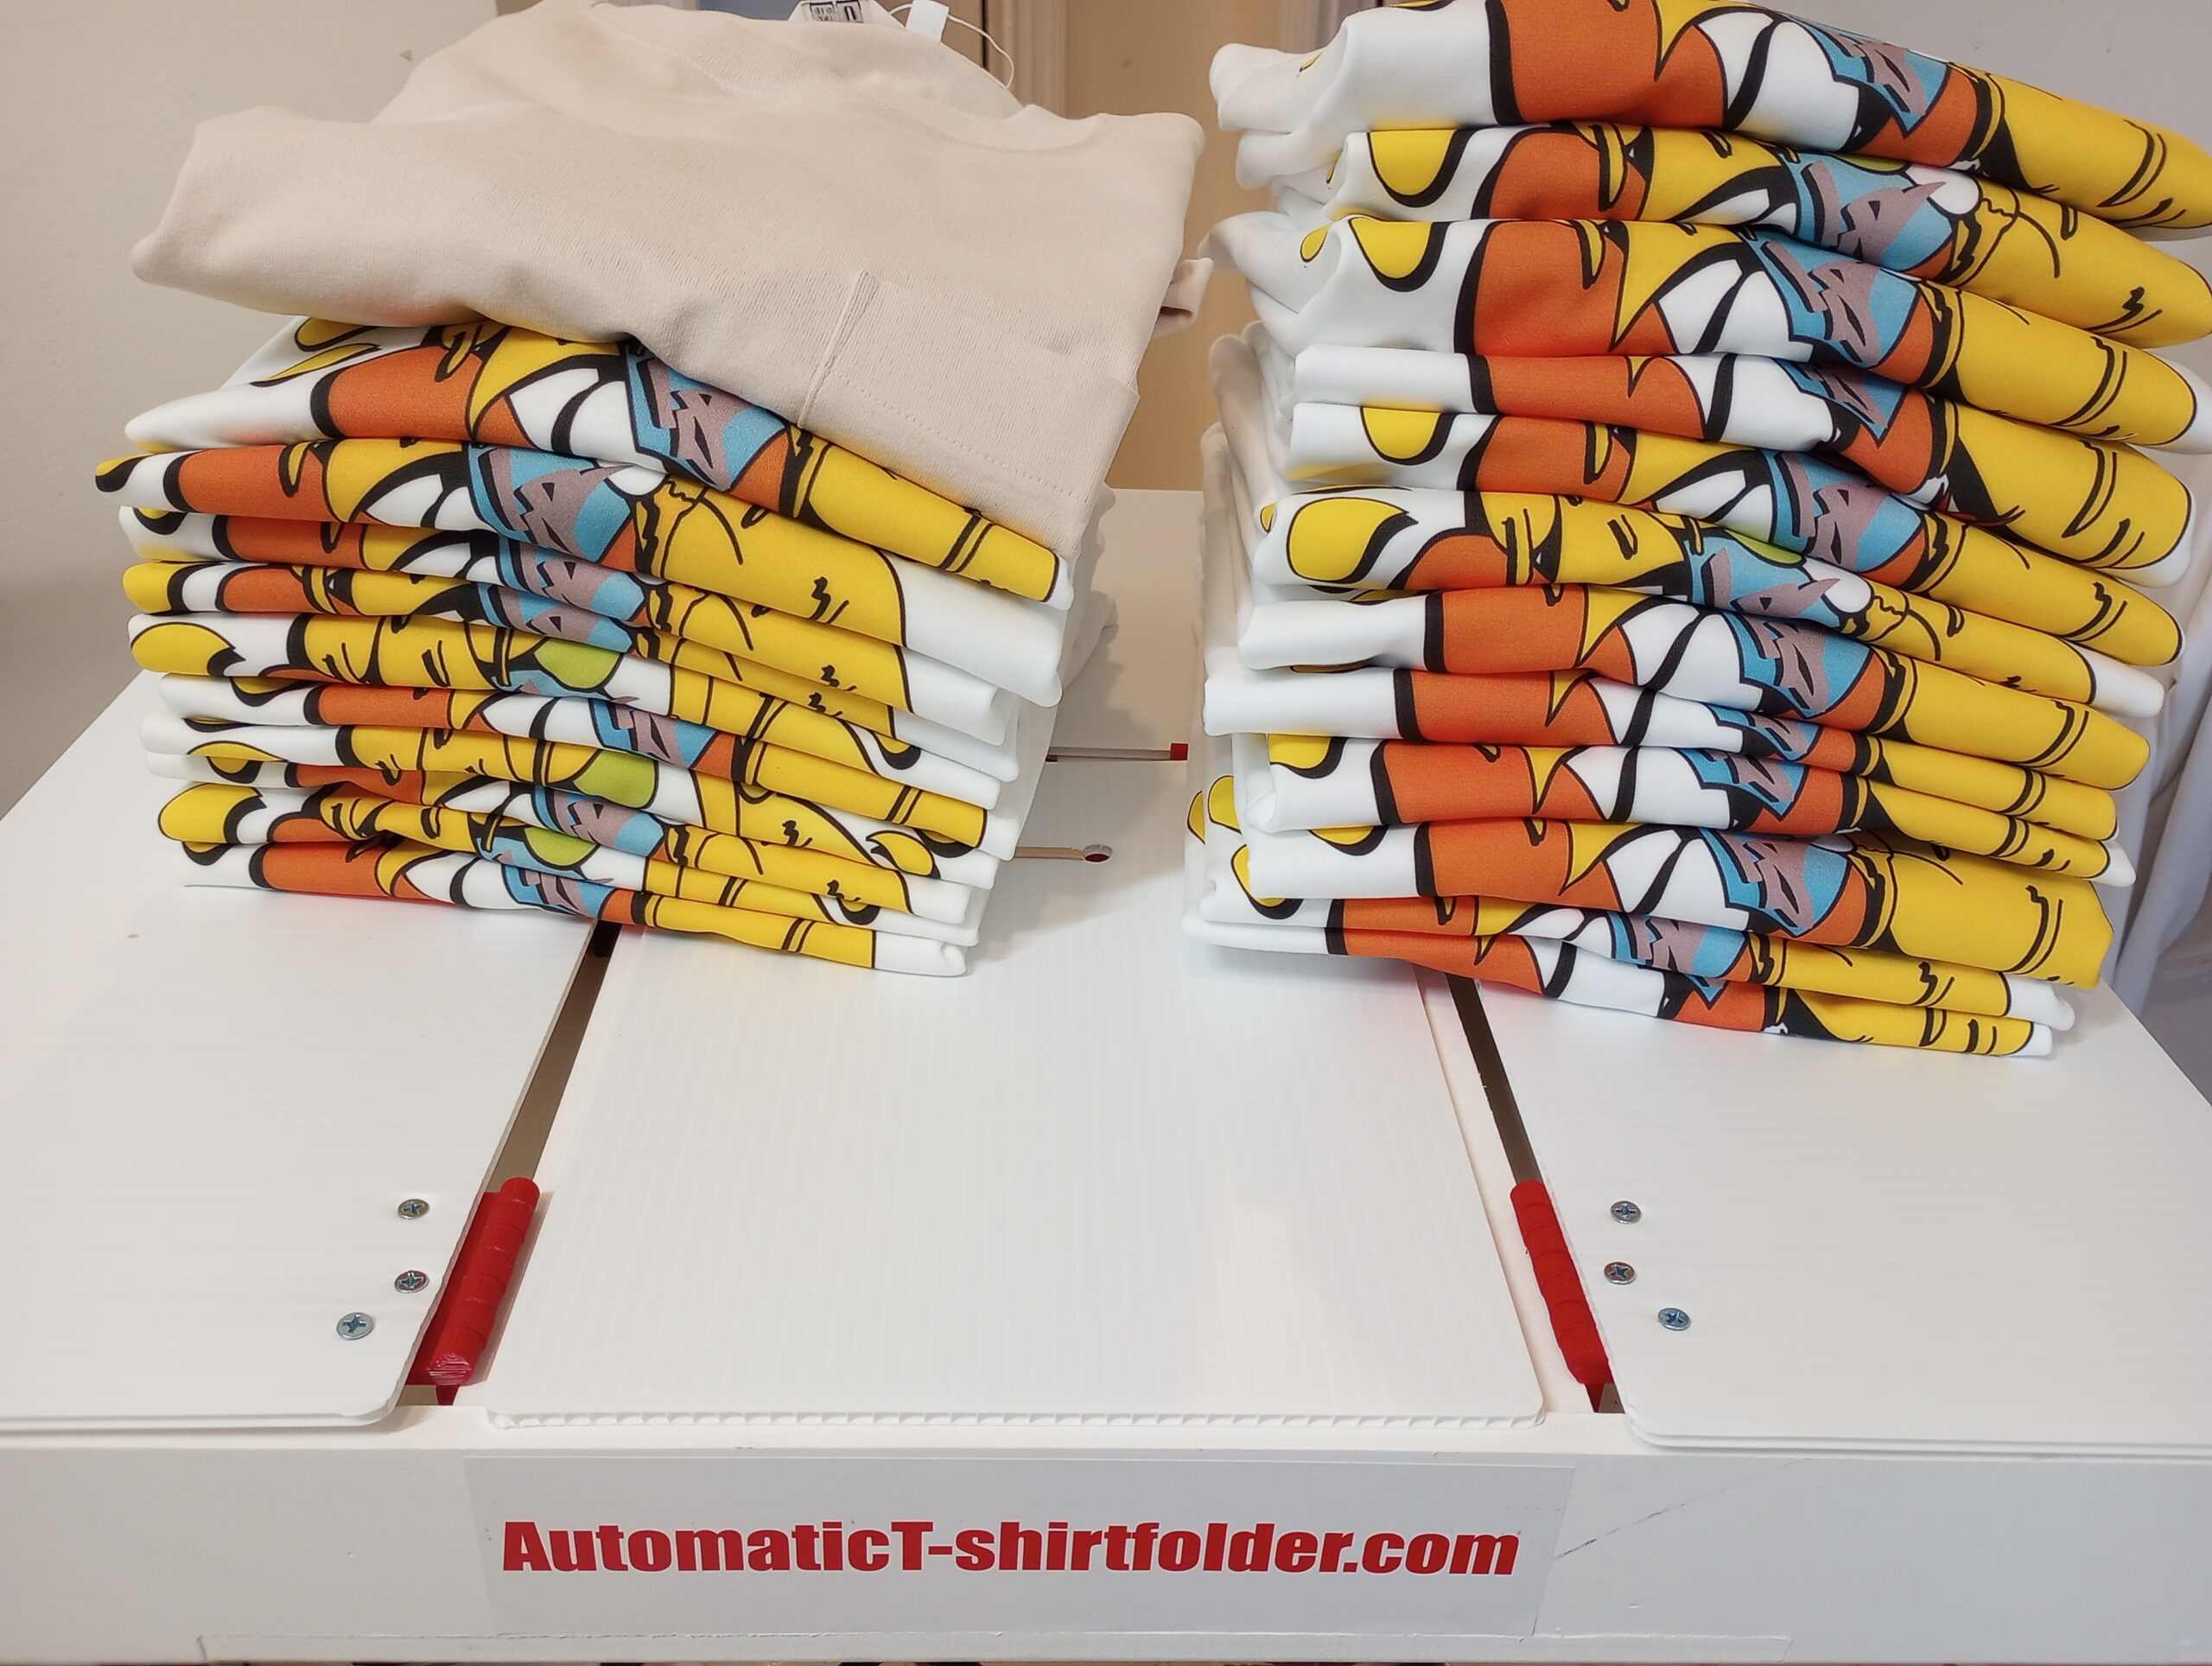 Automatic T-shirt folder